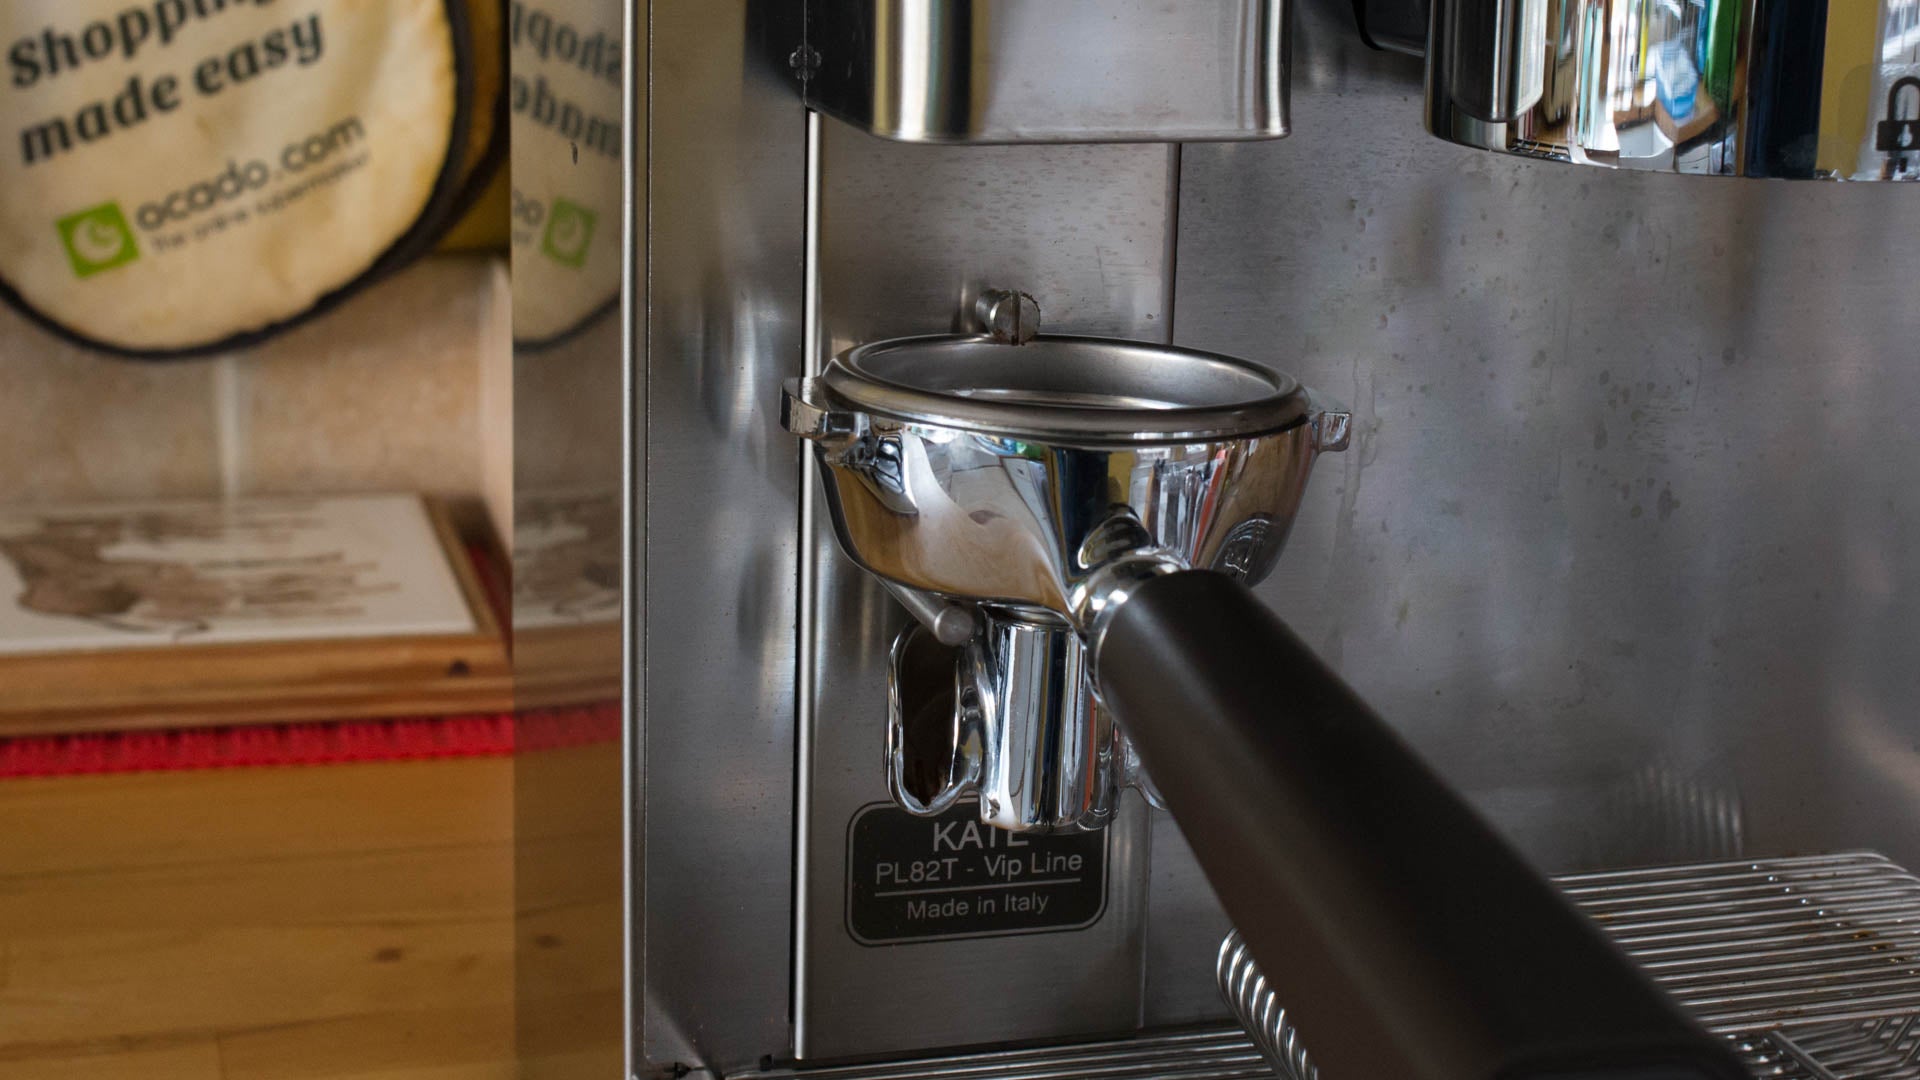 Lelit Kate espresso machine with portafilter attached.